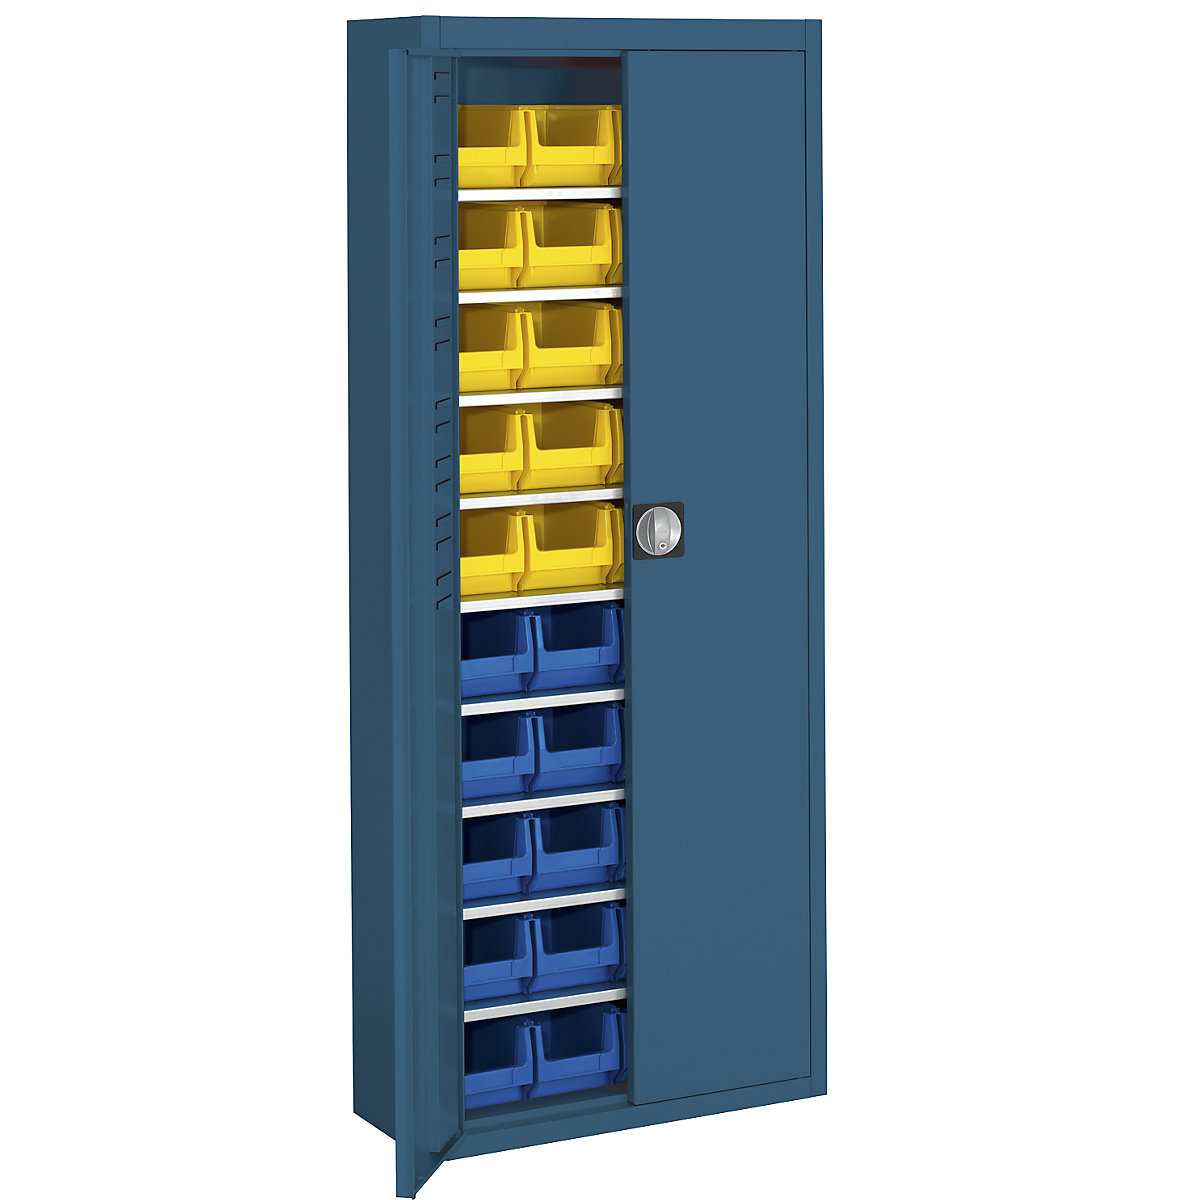 Storage cupboard with open fronted storage bins – mauser